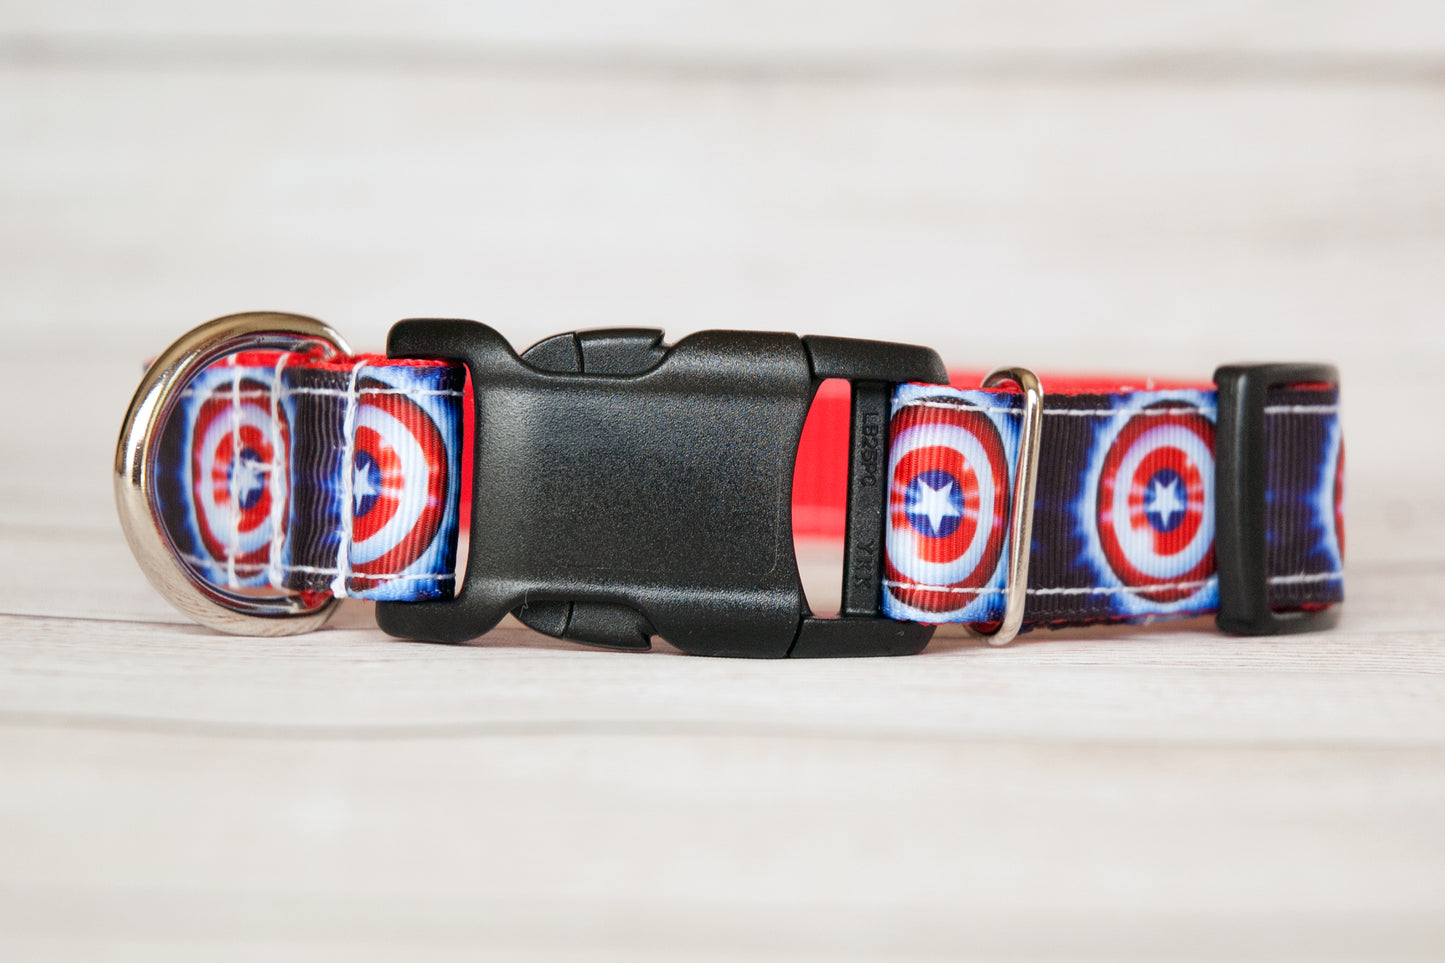 America Shield dog collar, Patriotic hero dog collar and/or leash. 1 inch wide